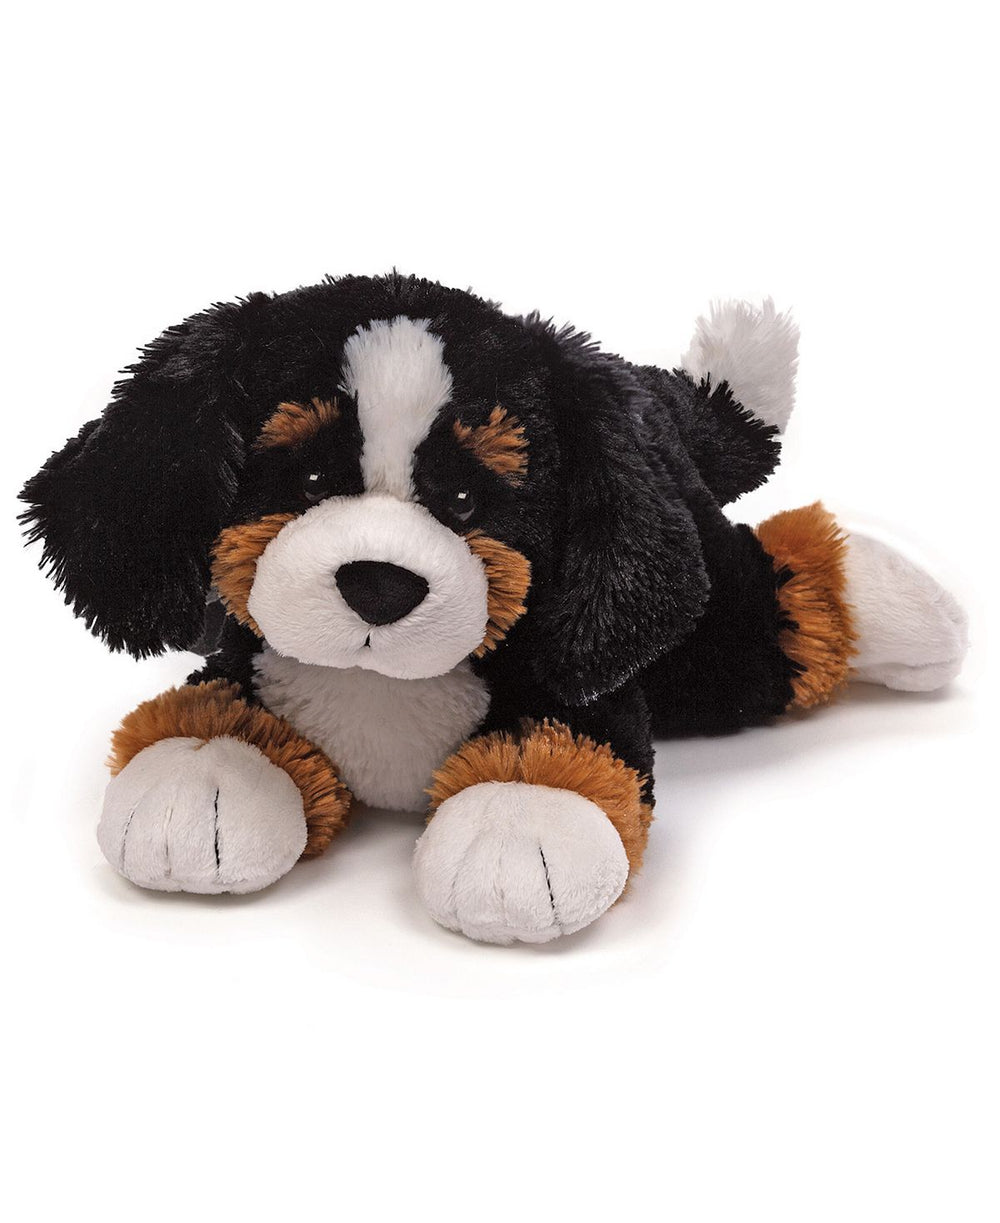 Gund 13 inch Randle Bernese Mountain Dog Plush - Realistic Stuffed Animal